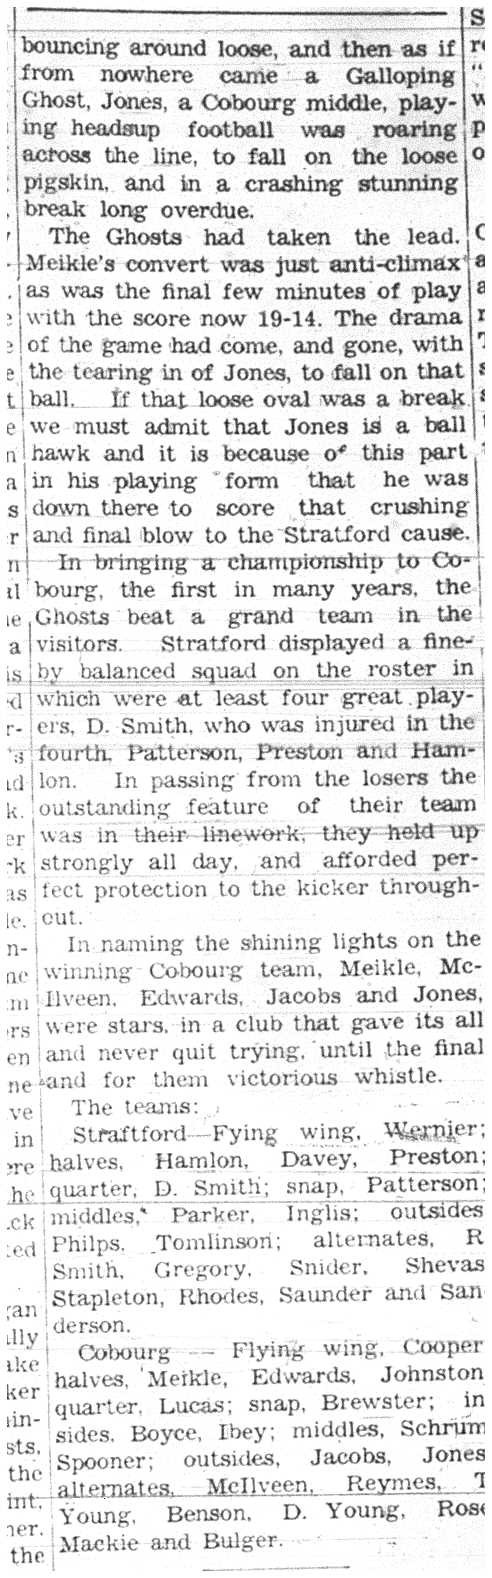 1937-12-02 Football - GG vs Stratford3